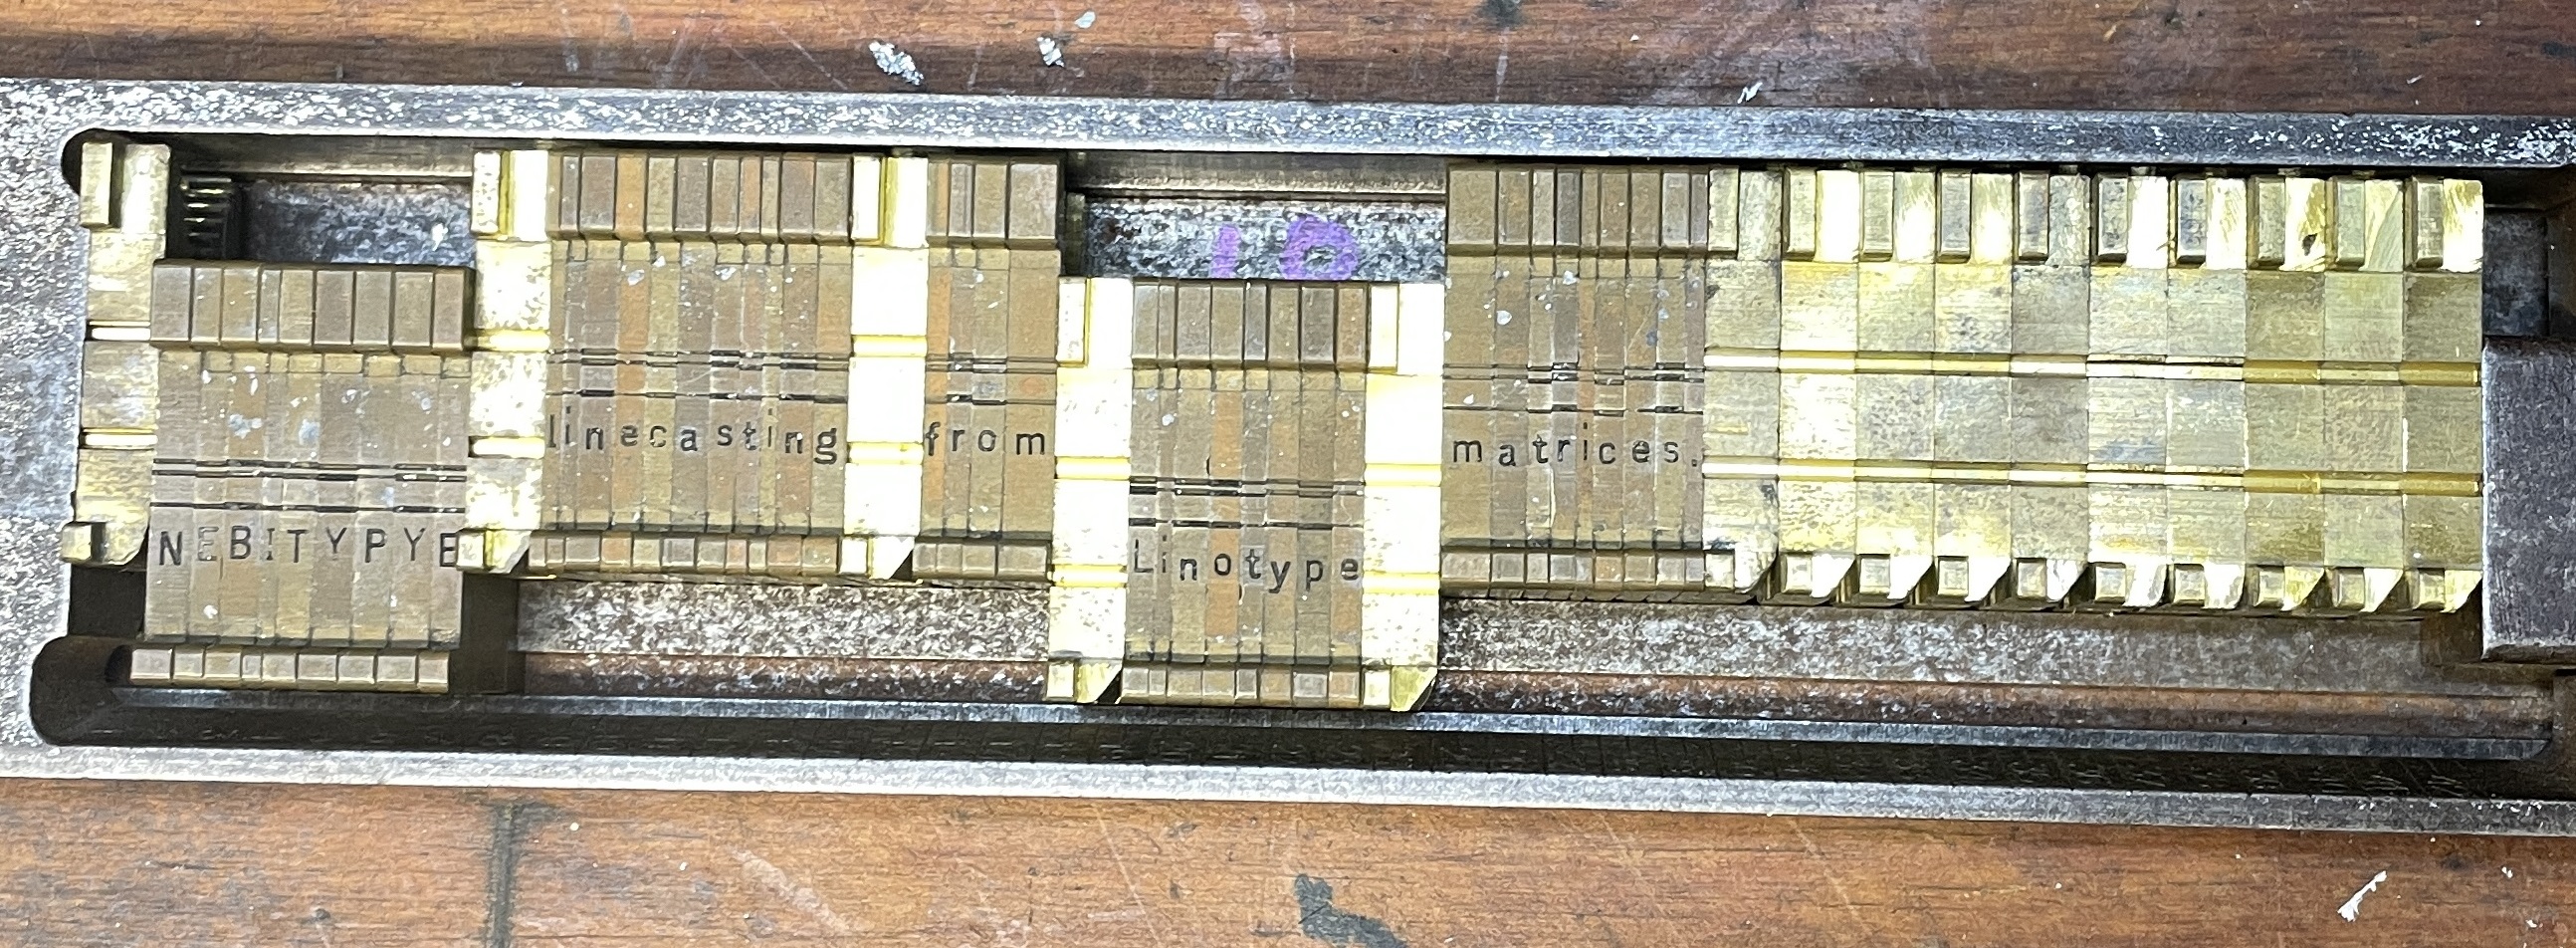 Nebitype Linotype Stick with Linotype Mats